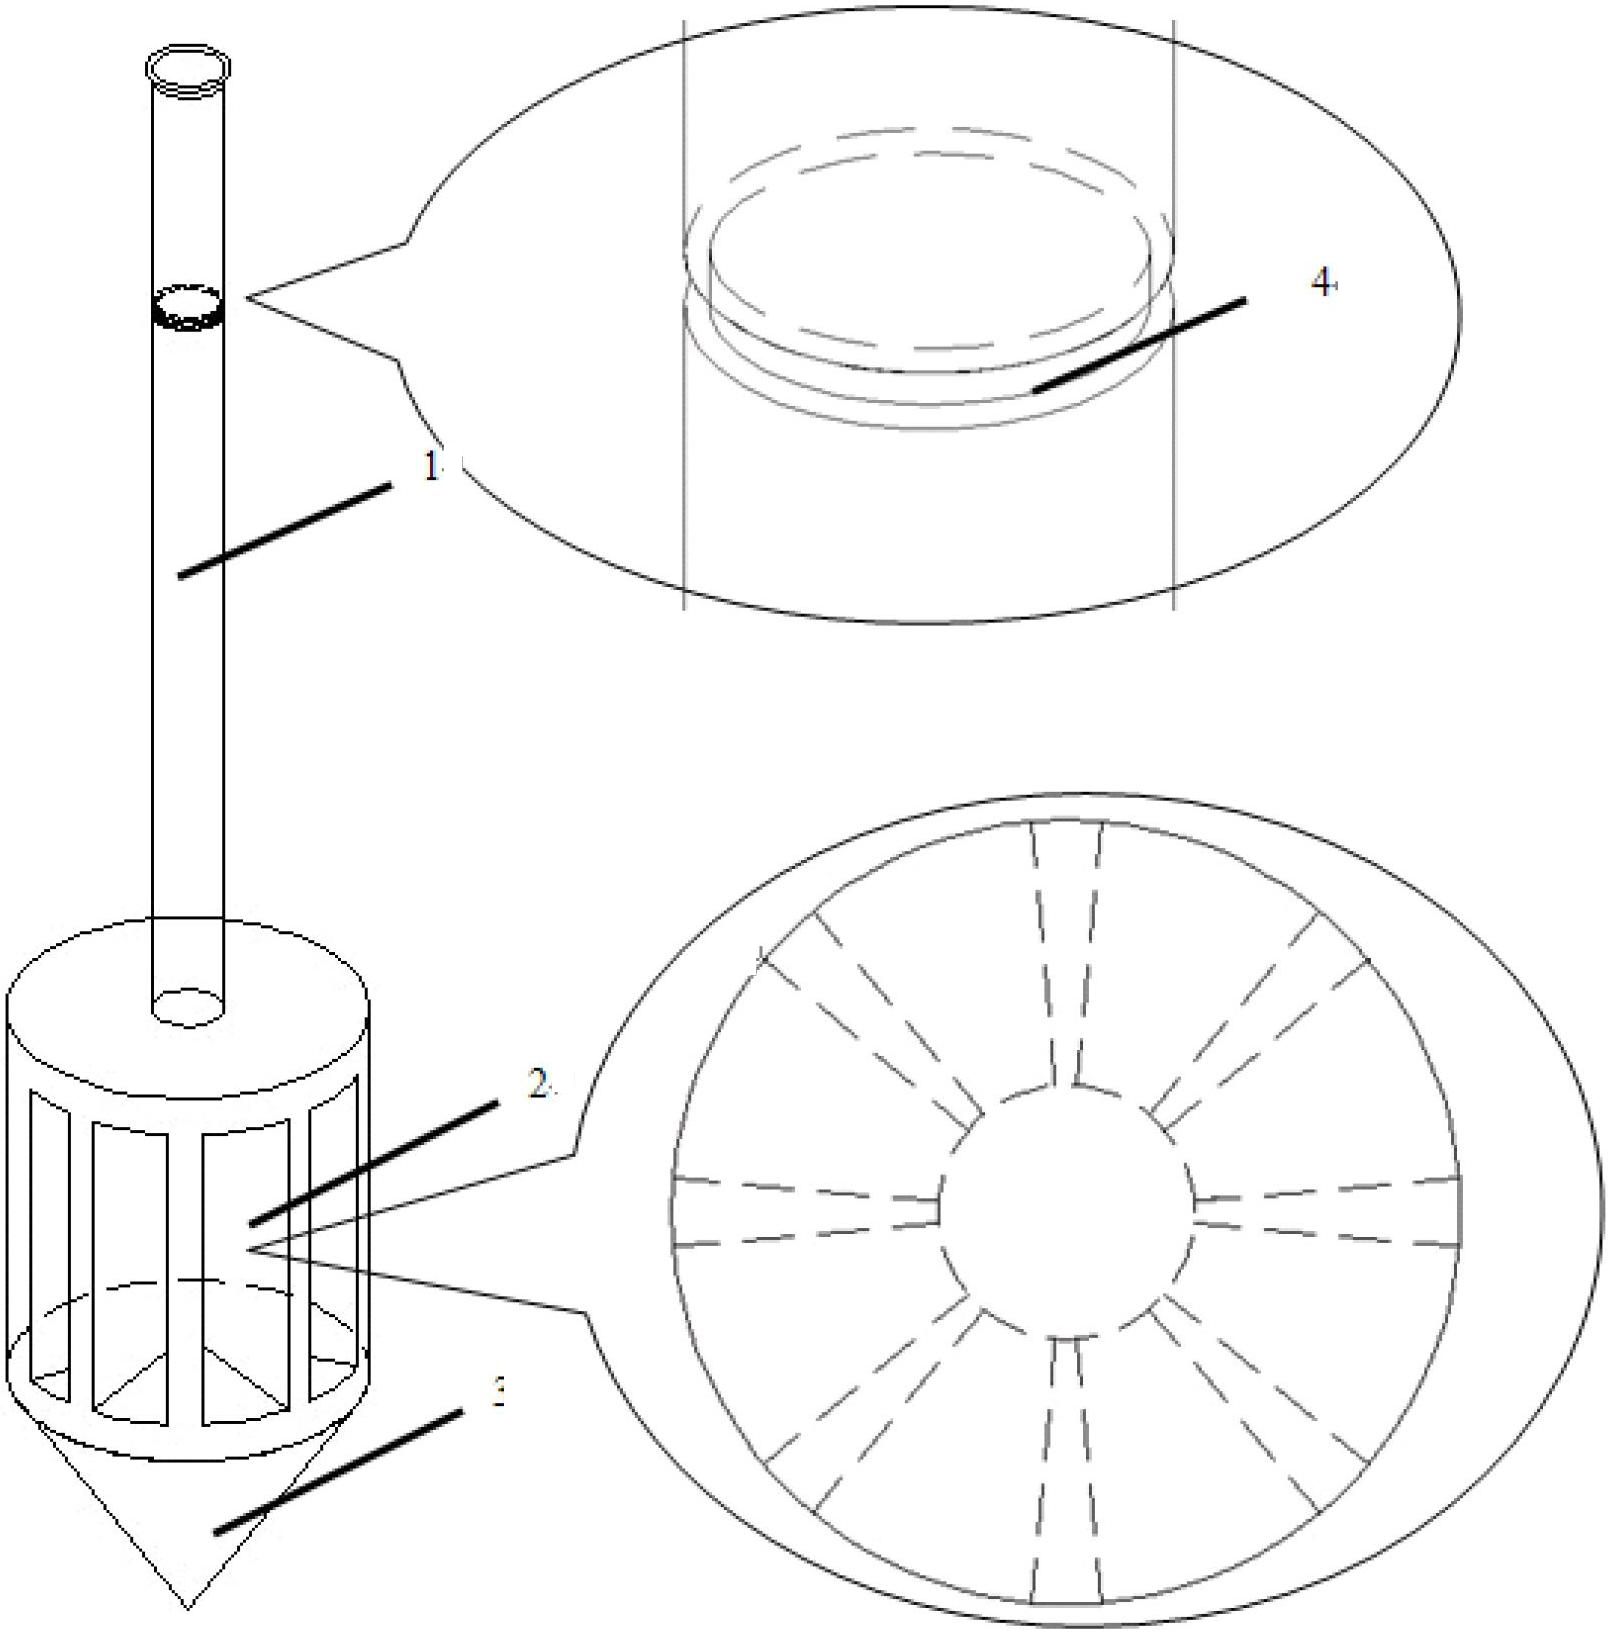 Multi-depth rotating-wheel closed sampler and method thereof